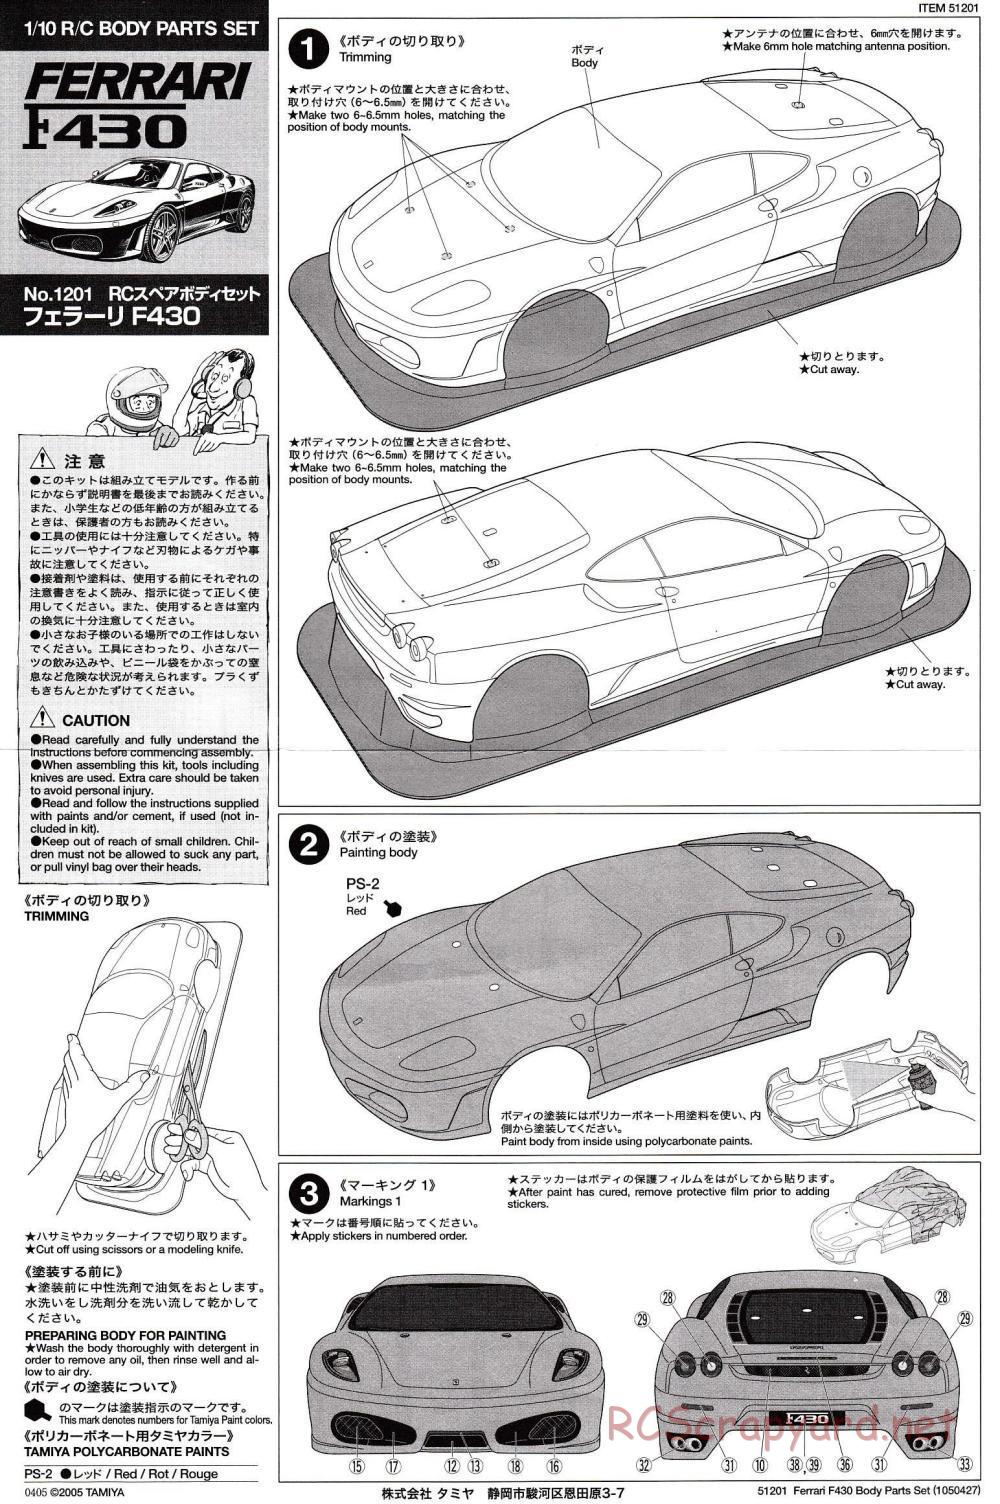 Tamiya - Ferrari F430 - TA05 Chassis - Body Manual - Page 1